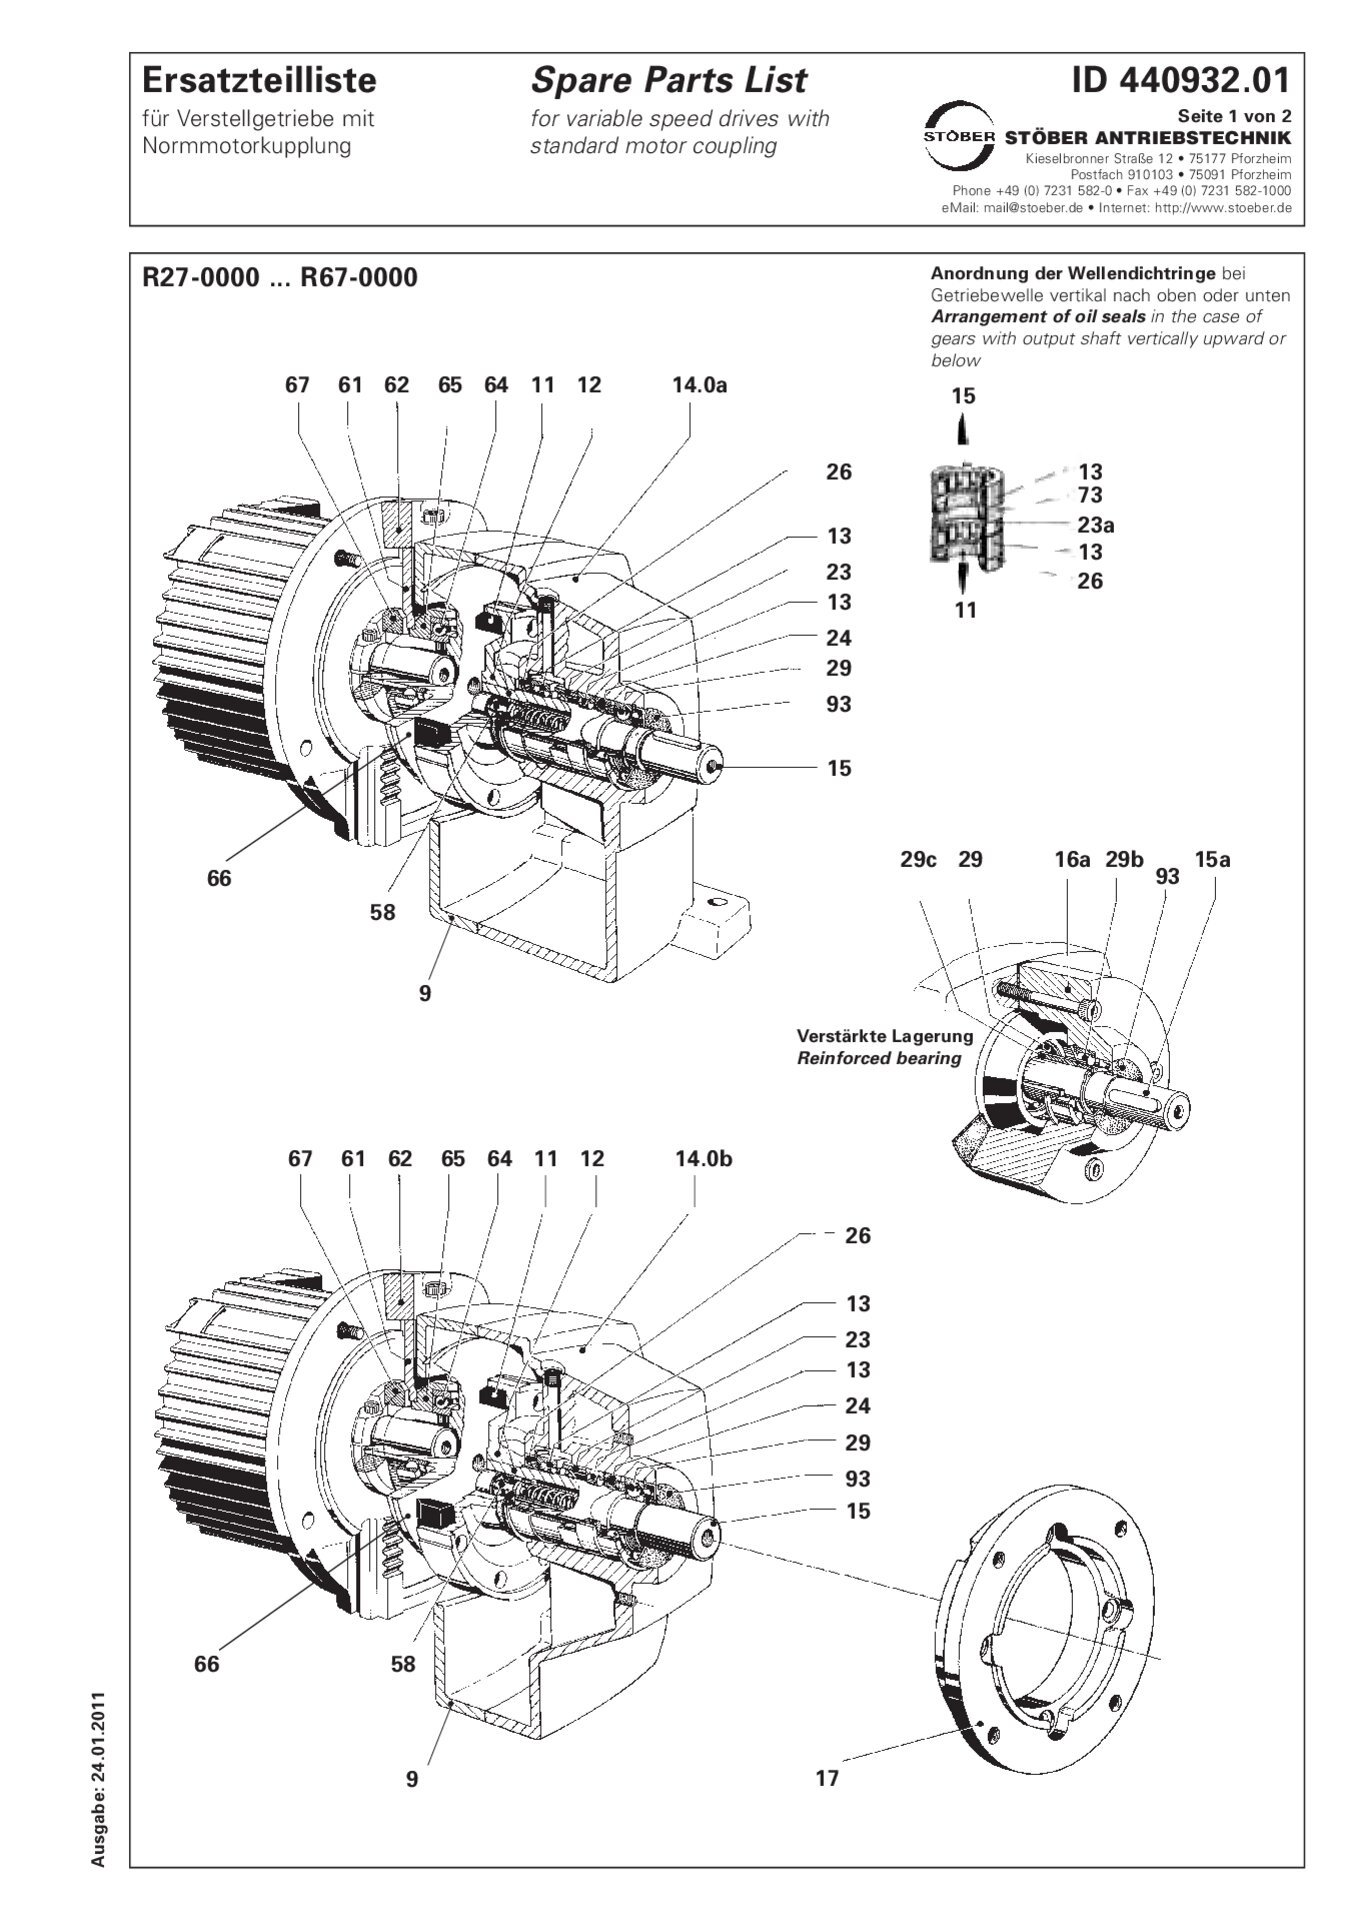 Listino dei pezzi di ricambio R27-0/R37-0/R47-0/R57-0/R67-0 con accoppiamento motore standardErsatzteilliste R27-0000 - R67-0000 mit NormmotorkupplungSpare parts list R27-0/R37-0/R47-0/R57-0/R67-0 with standard motor couplingListe des pièces de rechange R27-0/R37-0/R47-0/R57-0/R67-0 avec accouplement de moteur standard